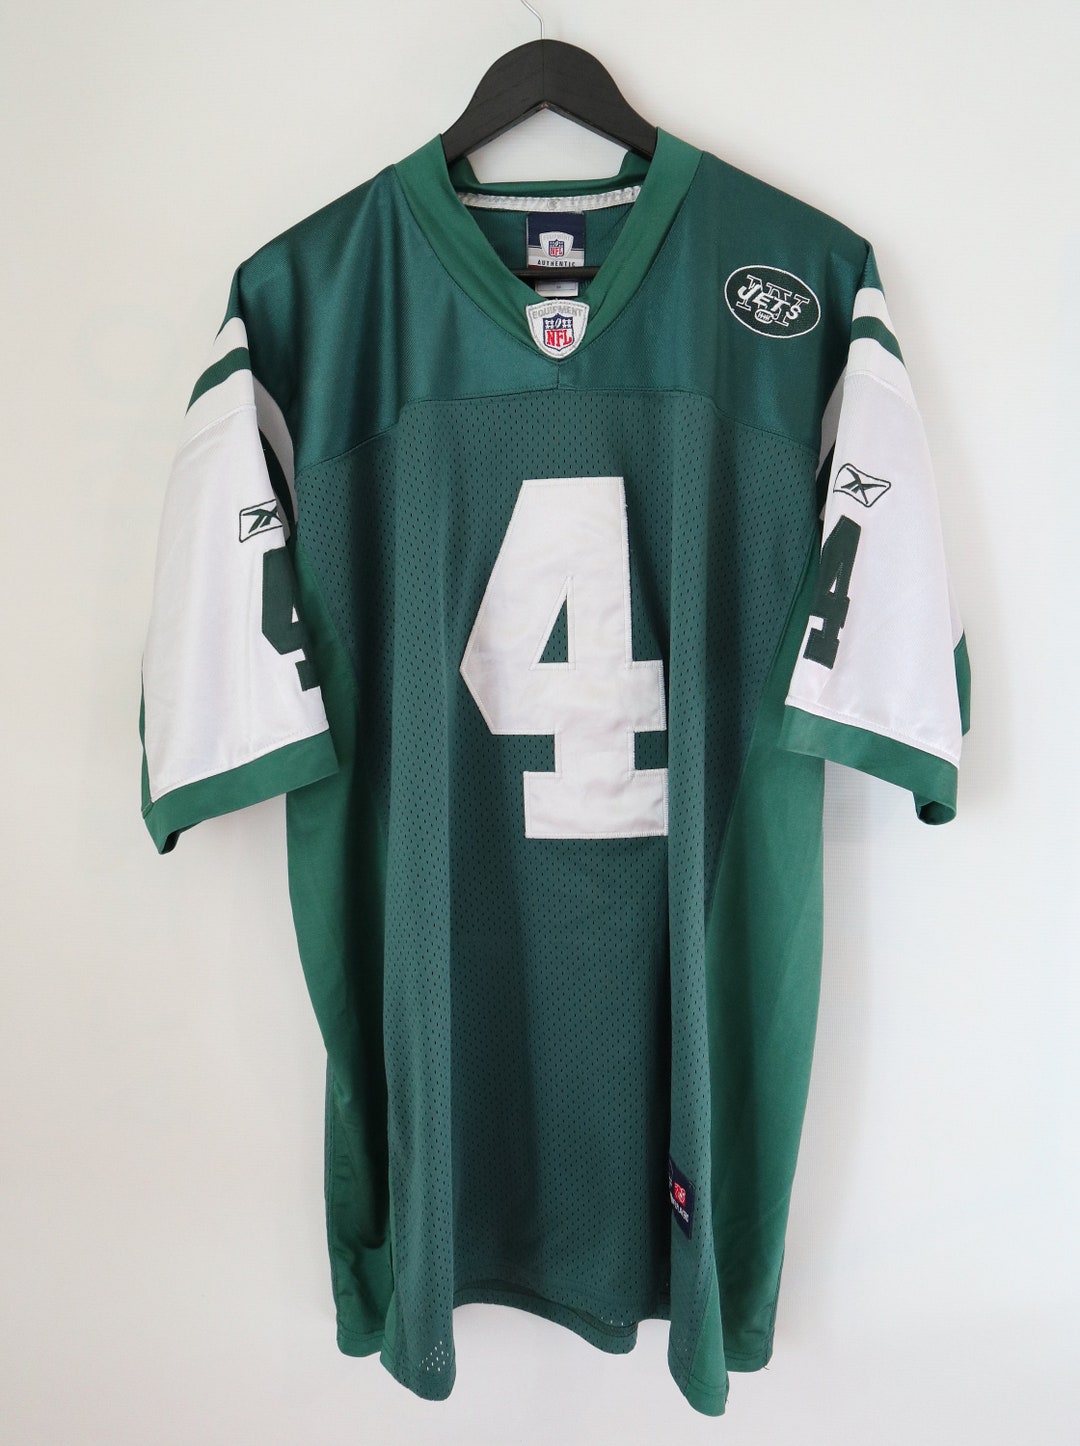 Brett Favre 2008 New York Jets NFL Reebok Authentic Game Jersey 2XL Packers  NWOT